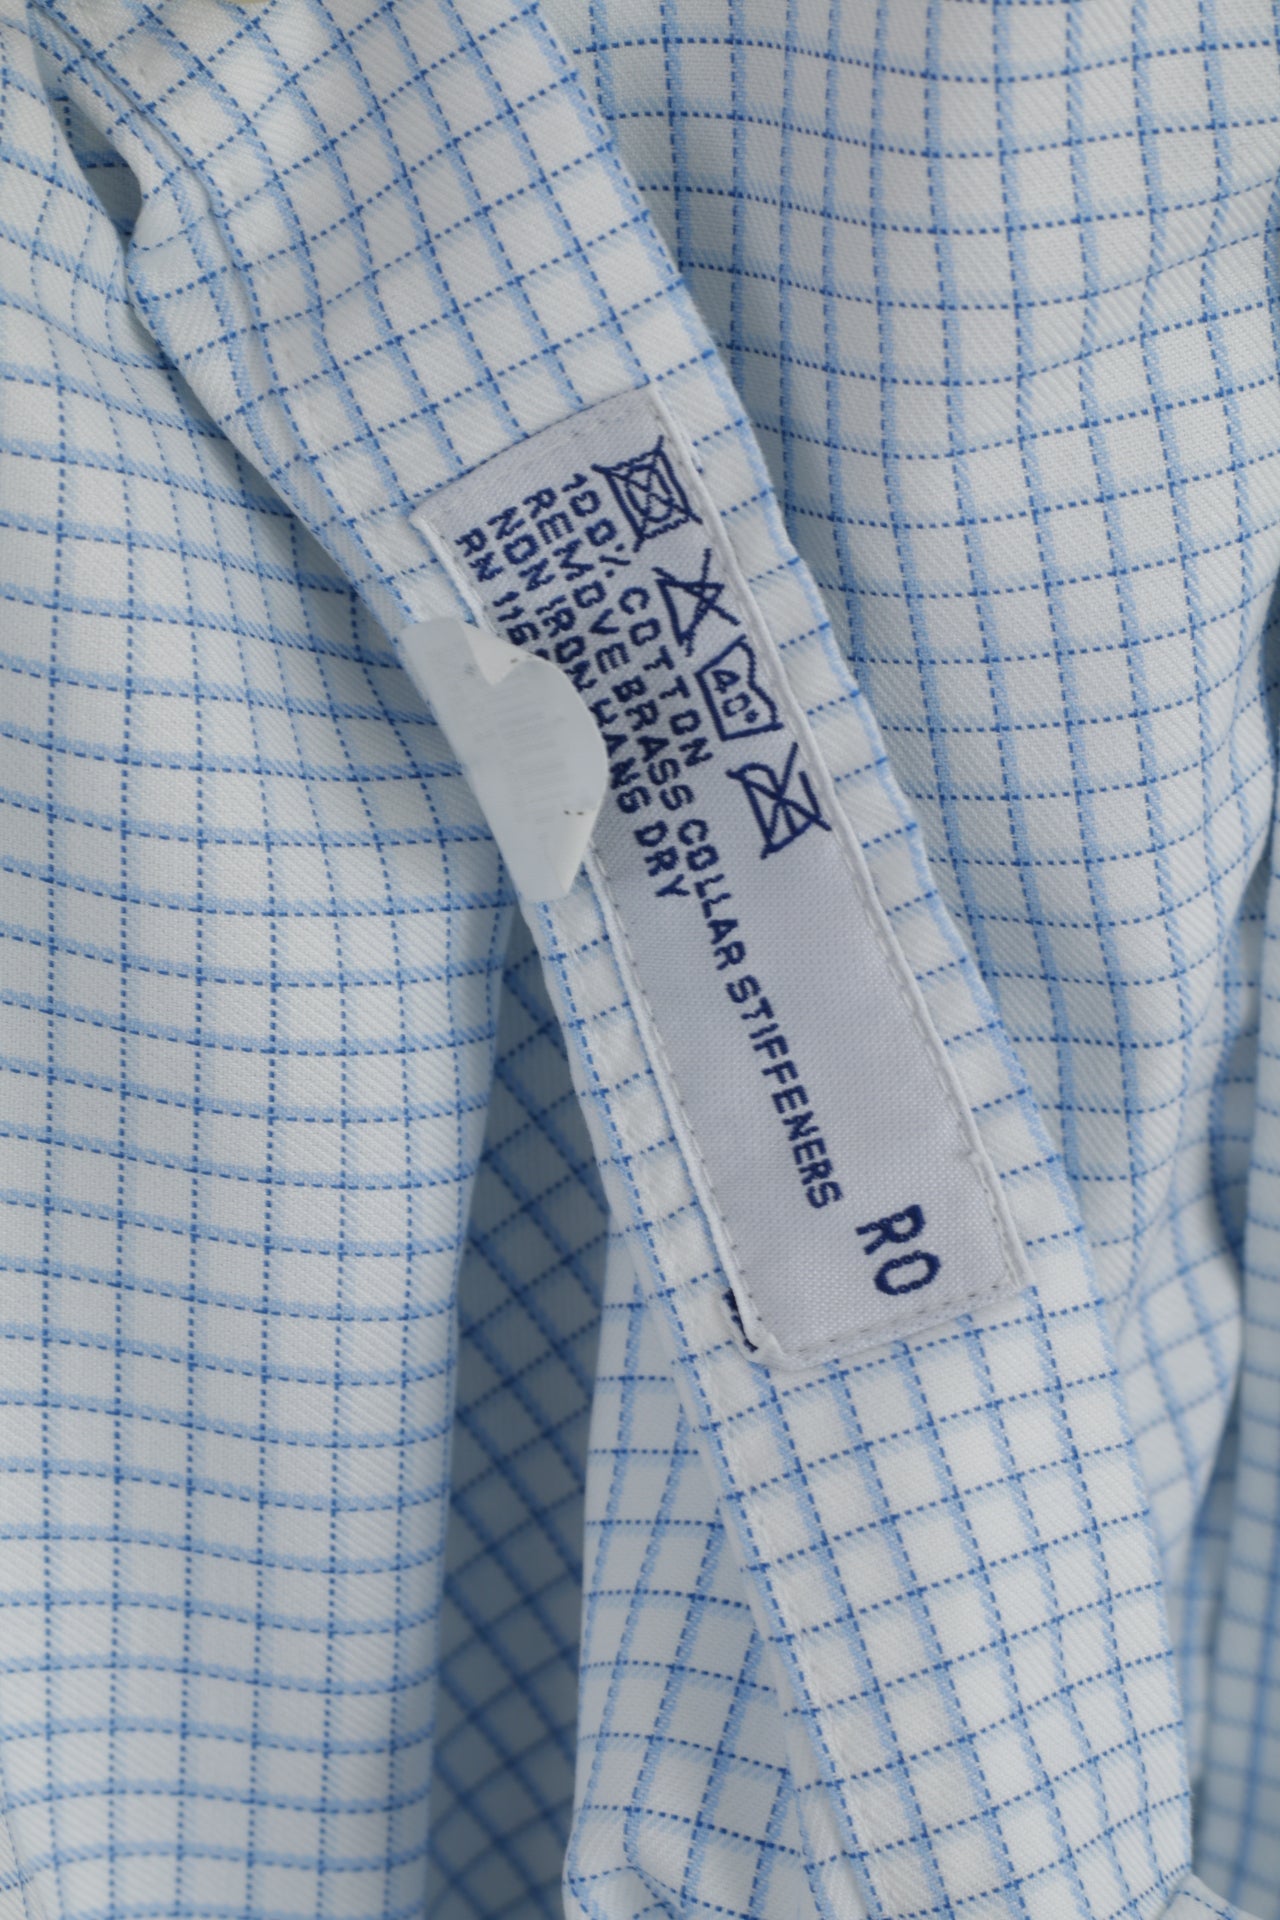 Charles Tyrwhitt Men 16 41 XL Casual Shirt White Blue Check Cuff Non Iron Long Sleeve Top